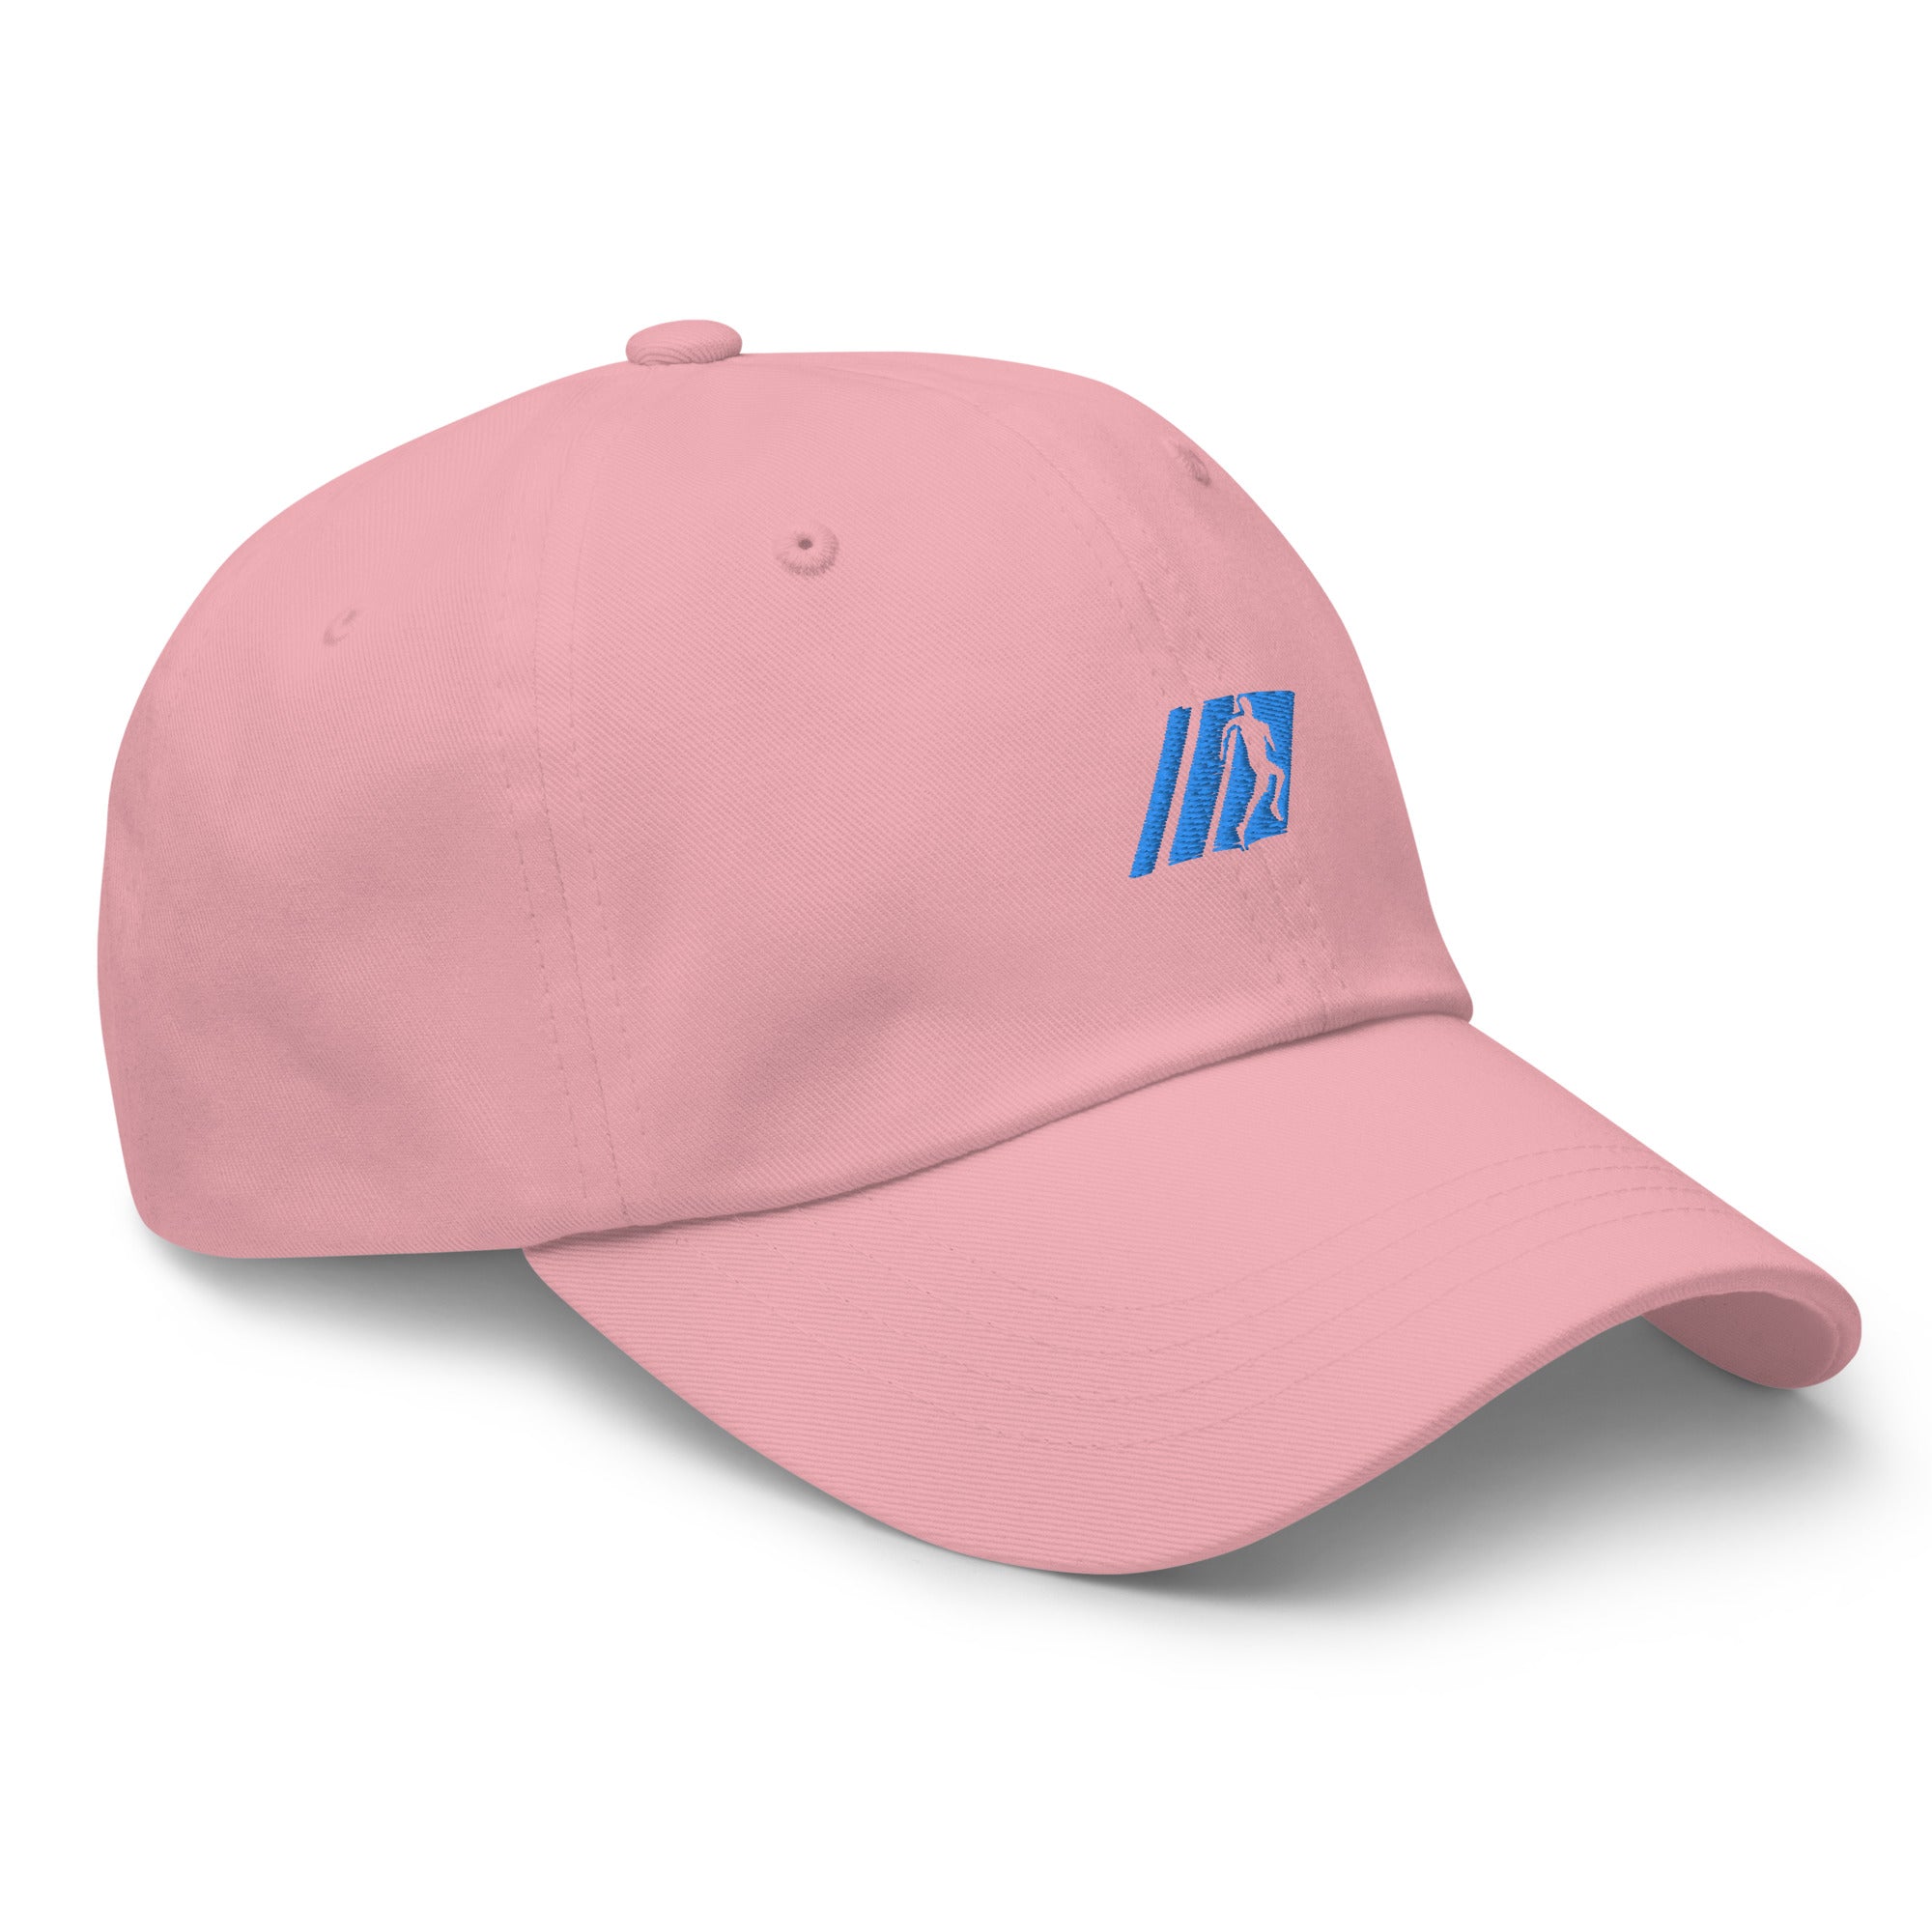 AGAD Sports Essential (Pink Adjustable Hat)